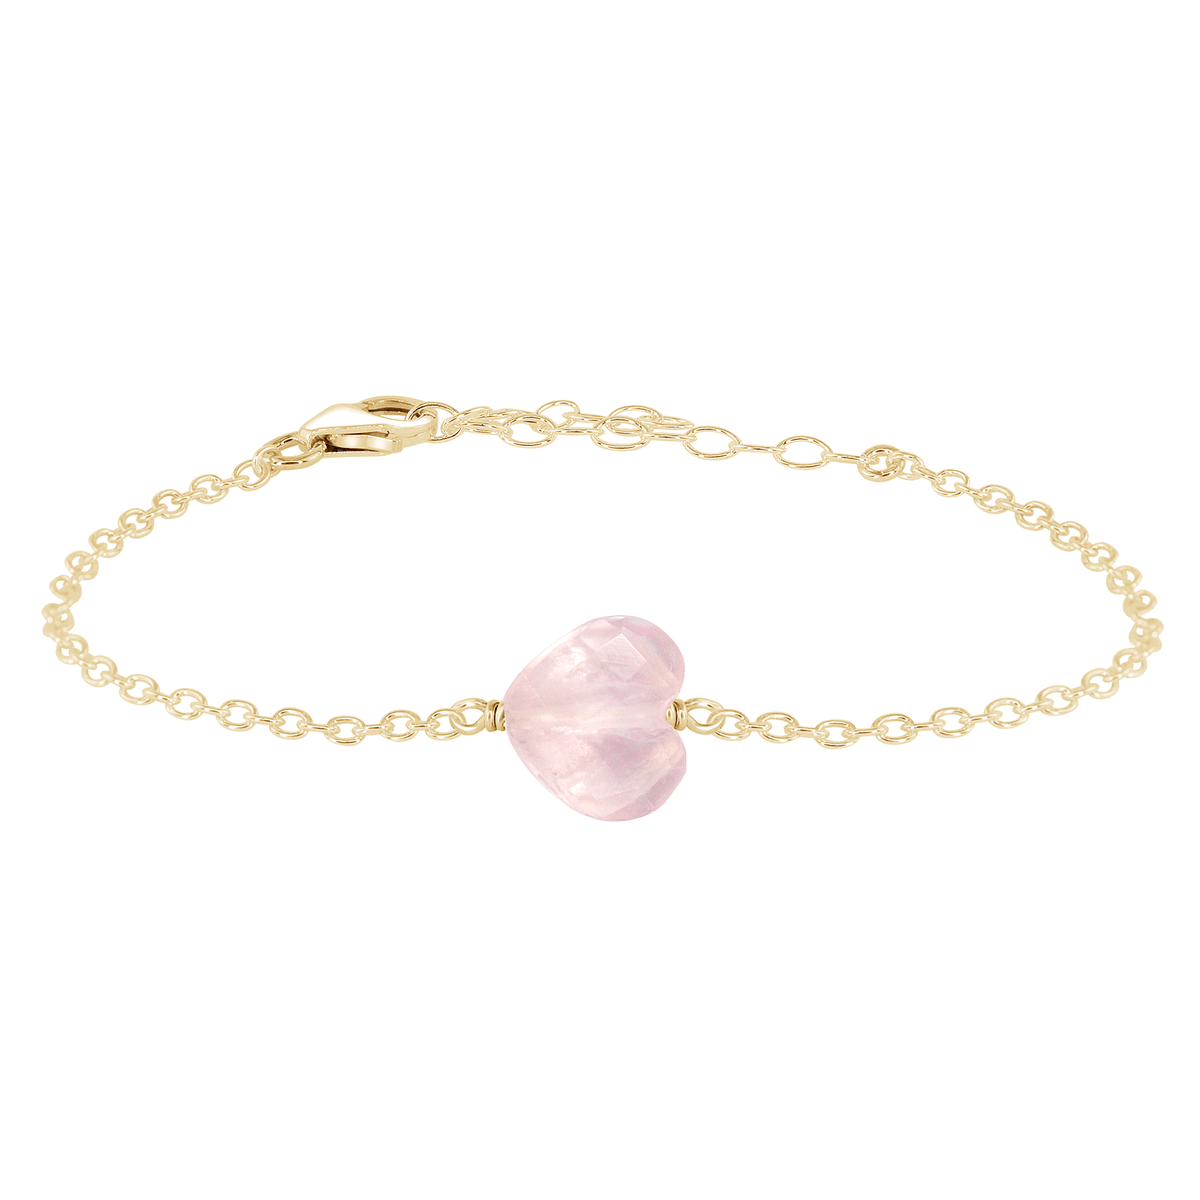 Rose Quartz Crystal Heart Bracelet - Rose Quartz Crystal Heart Bracelet - 14k Gold Fill - Luna Tide Handmade Crystal Jewellery